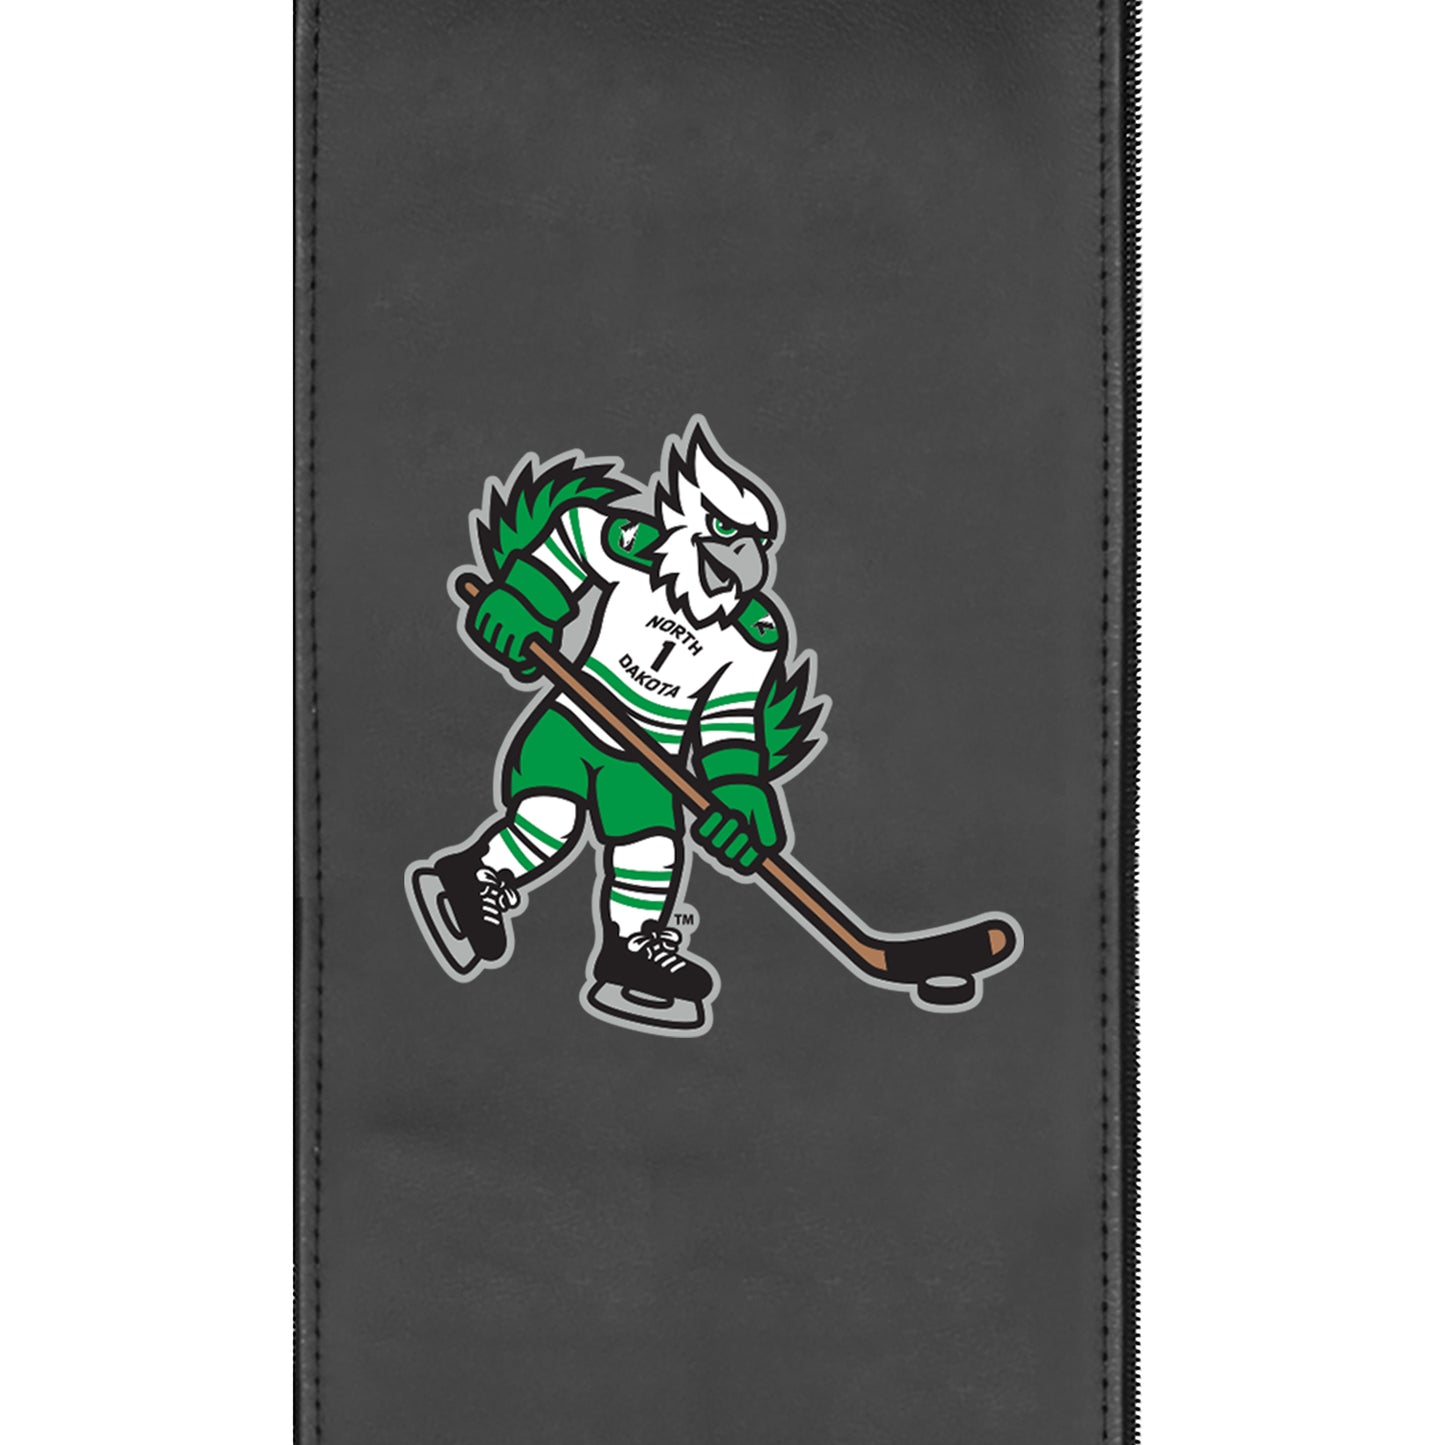 Copy of Copy of Game Rocker 100 with University of North Dakota Hockey Mascot Logo